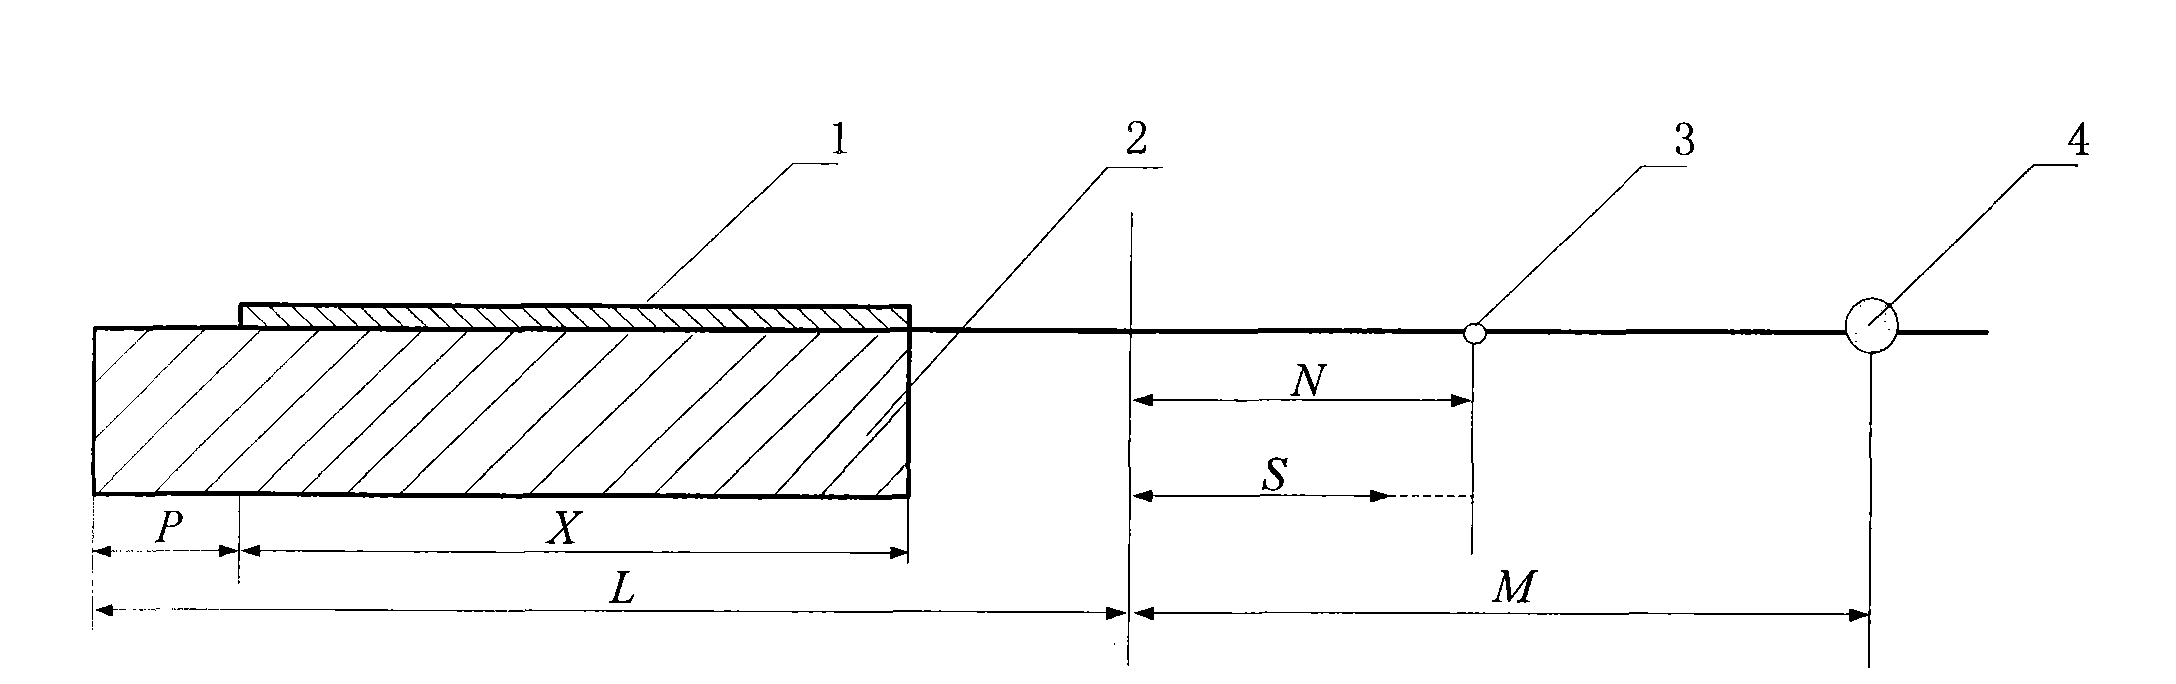 On-line model of motor starting time of bar finishing line separating plate and braking plate